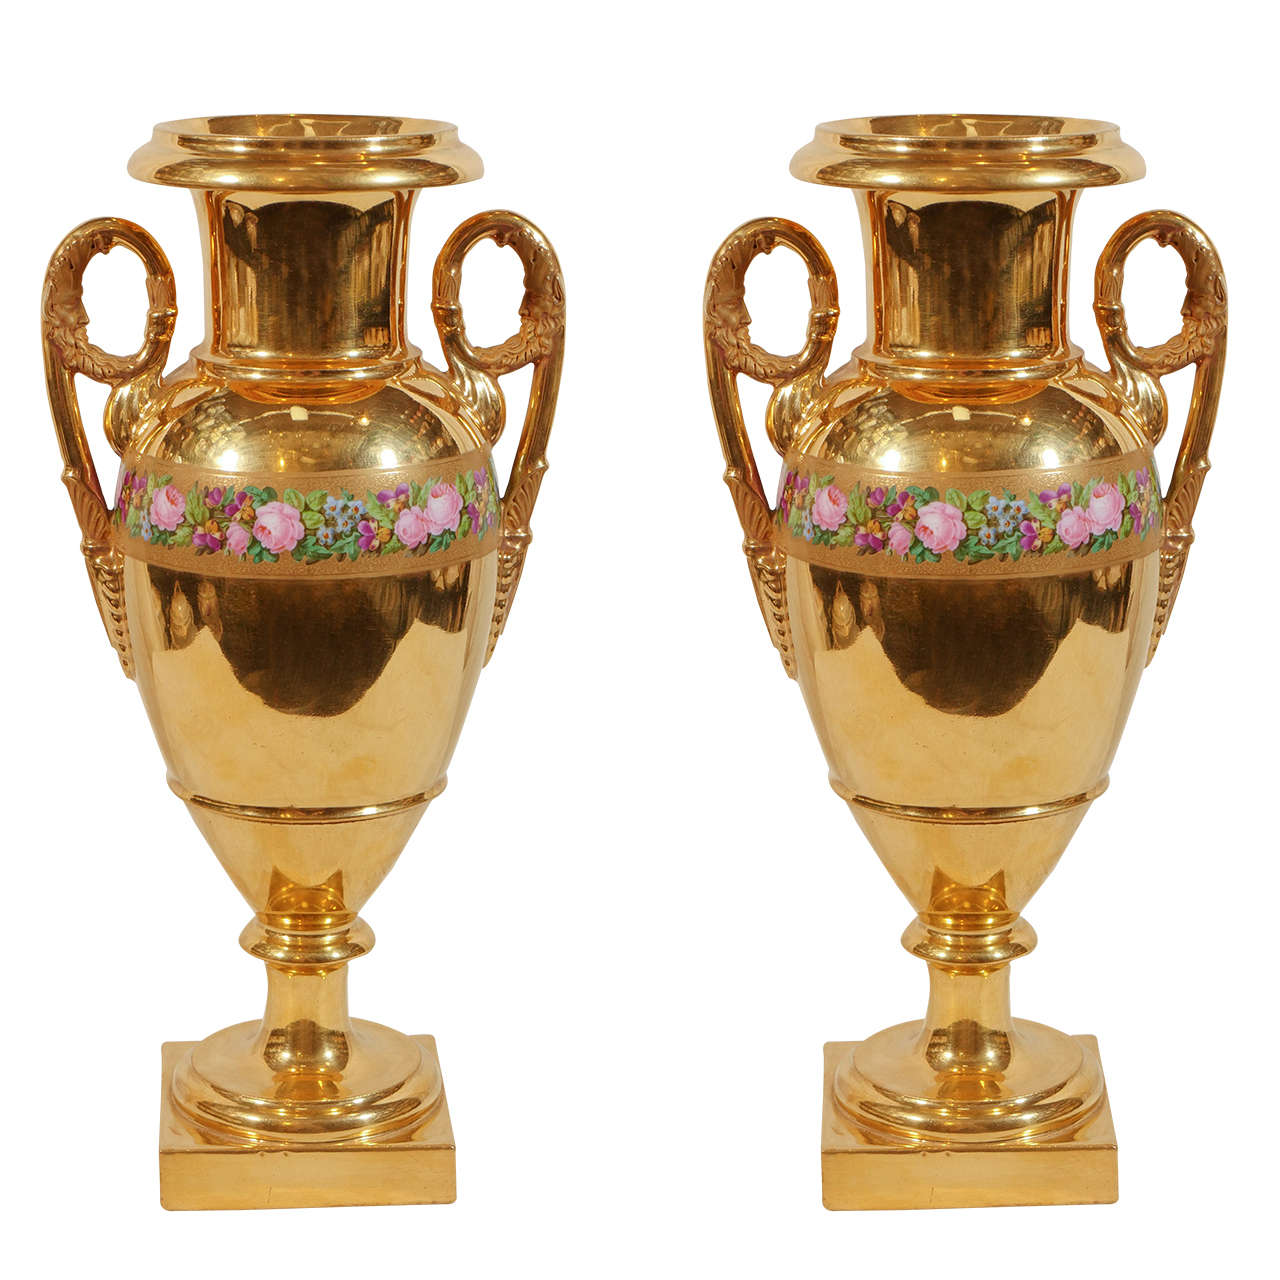 Pair Paris Porcelain Golden Mantle Vases Made in France Circa 1830 For Sale